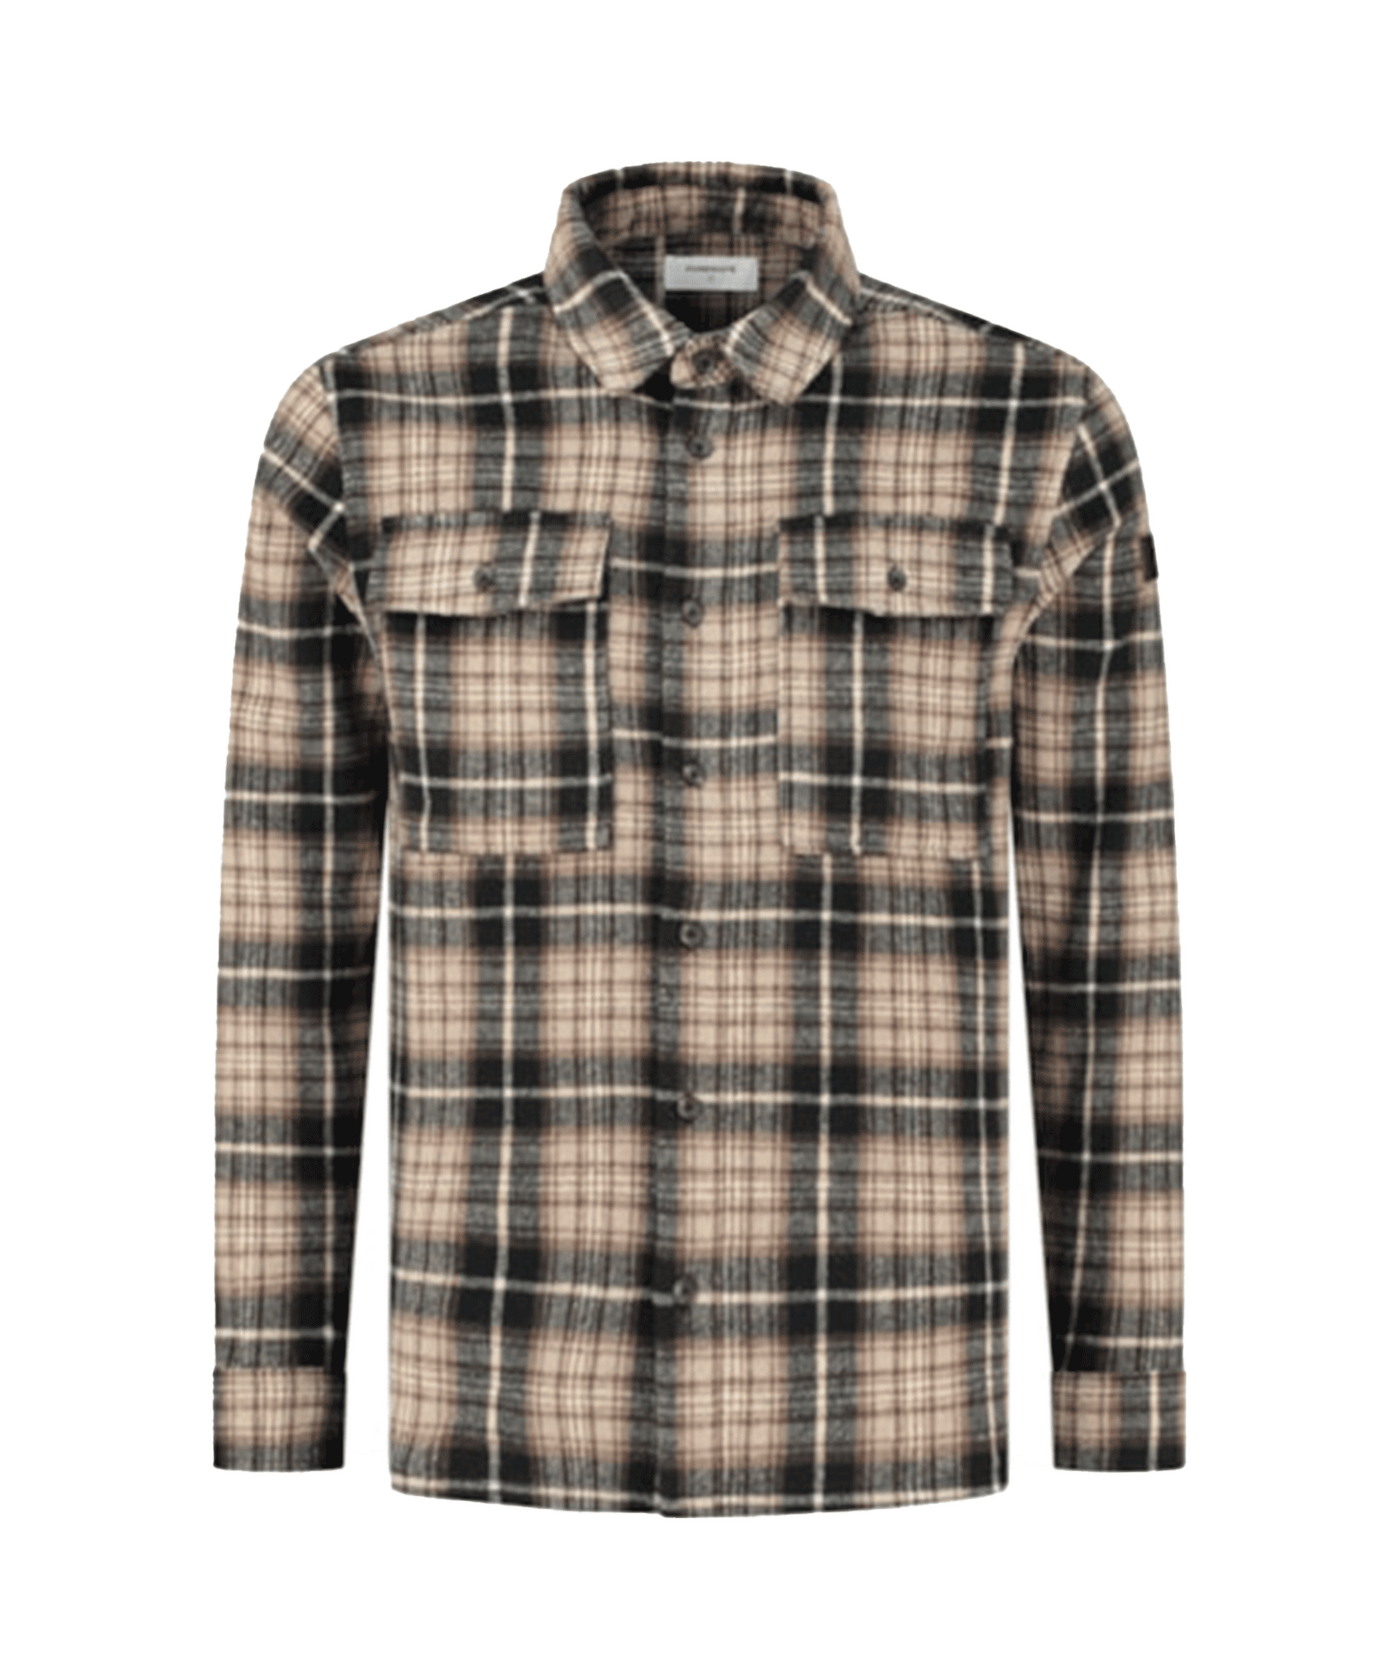 PureWhite - 23030207 - Wool Look Check Overshirt - Brown